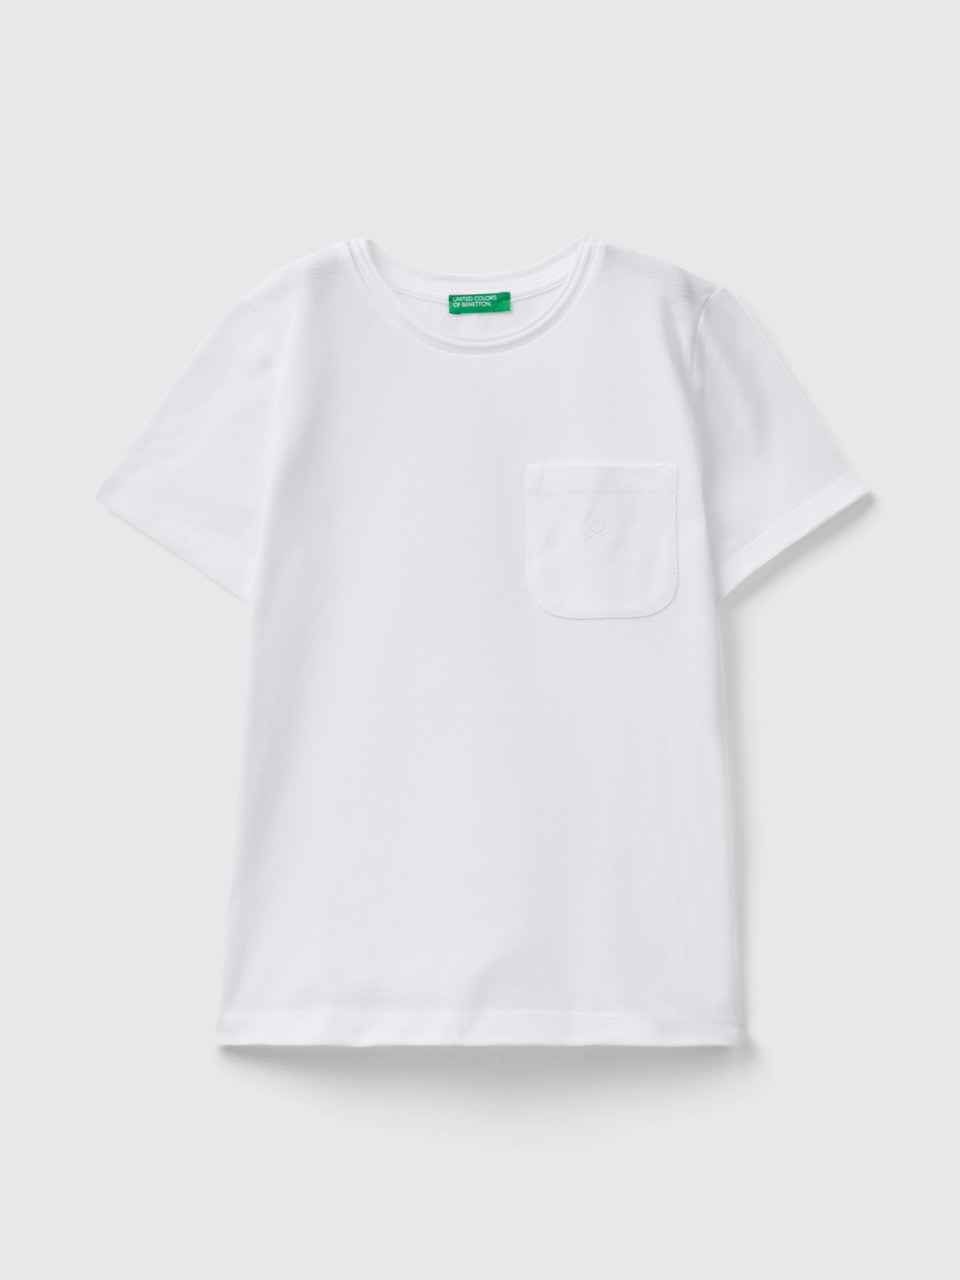 Benetton, Camiseta Con Bolsillo, Blanco, Niños